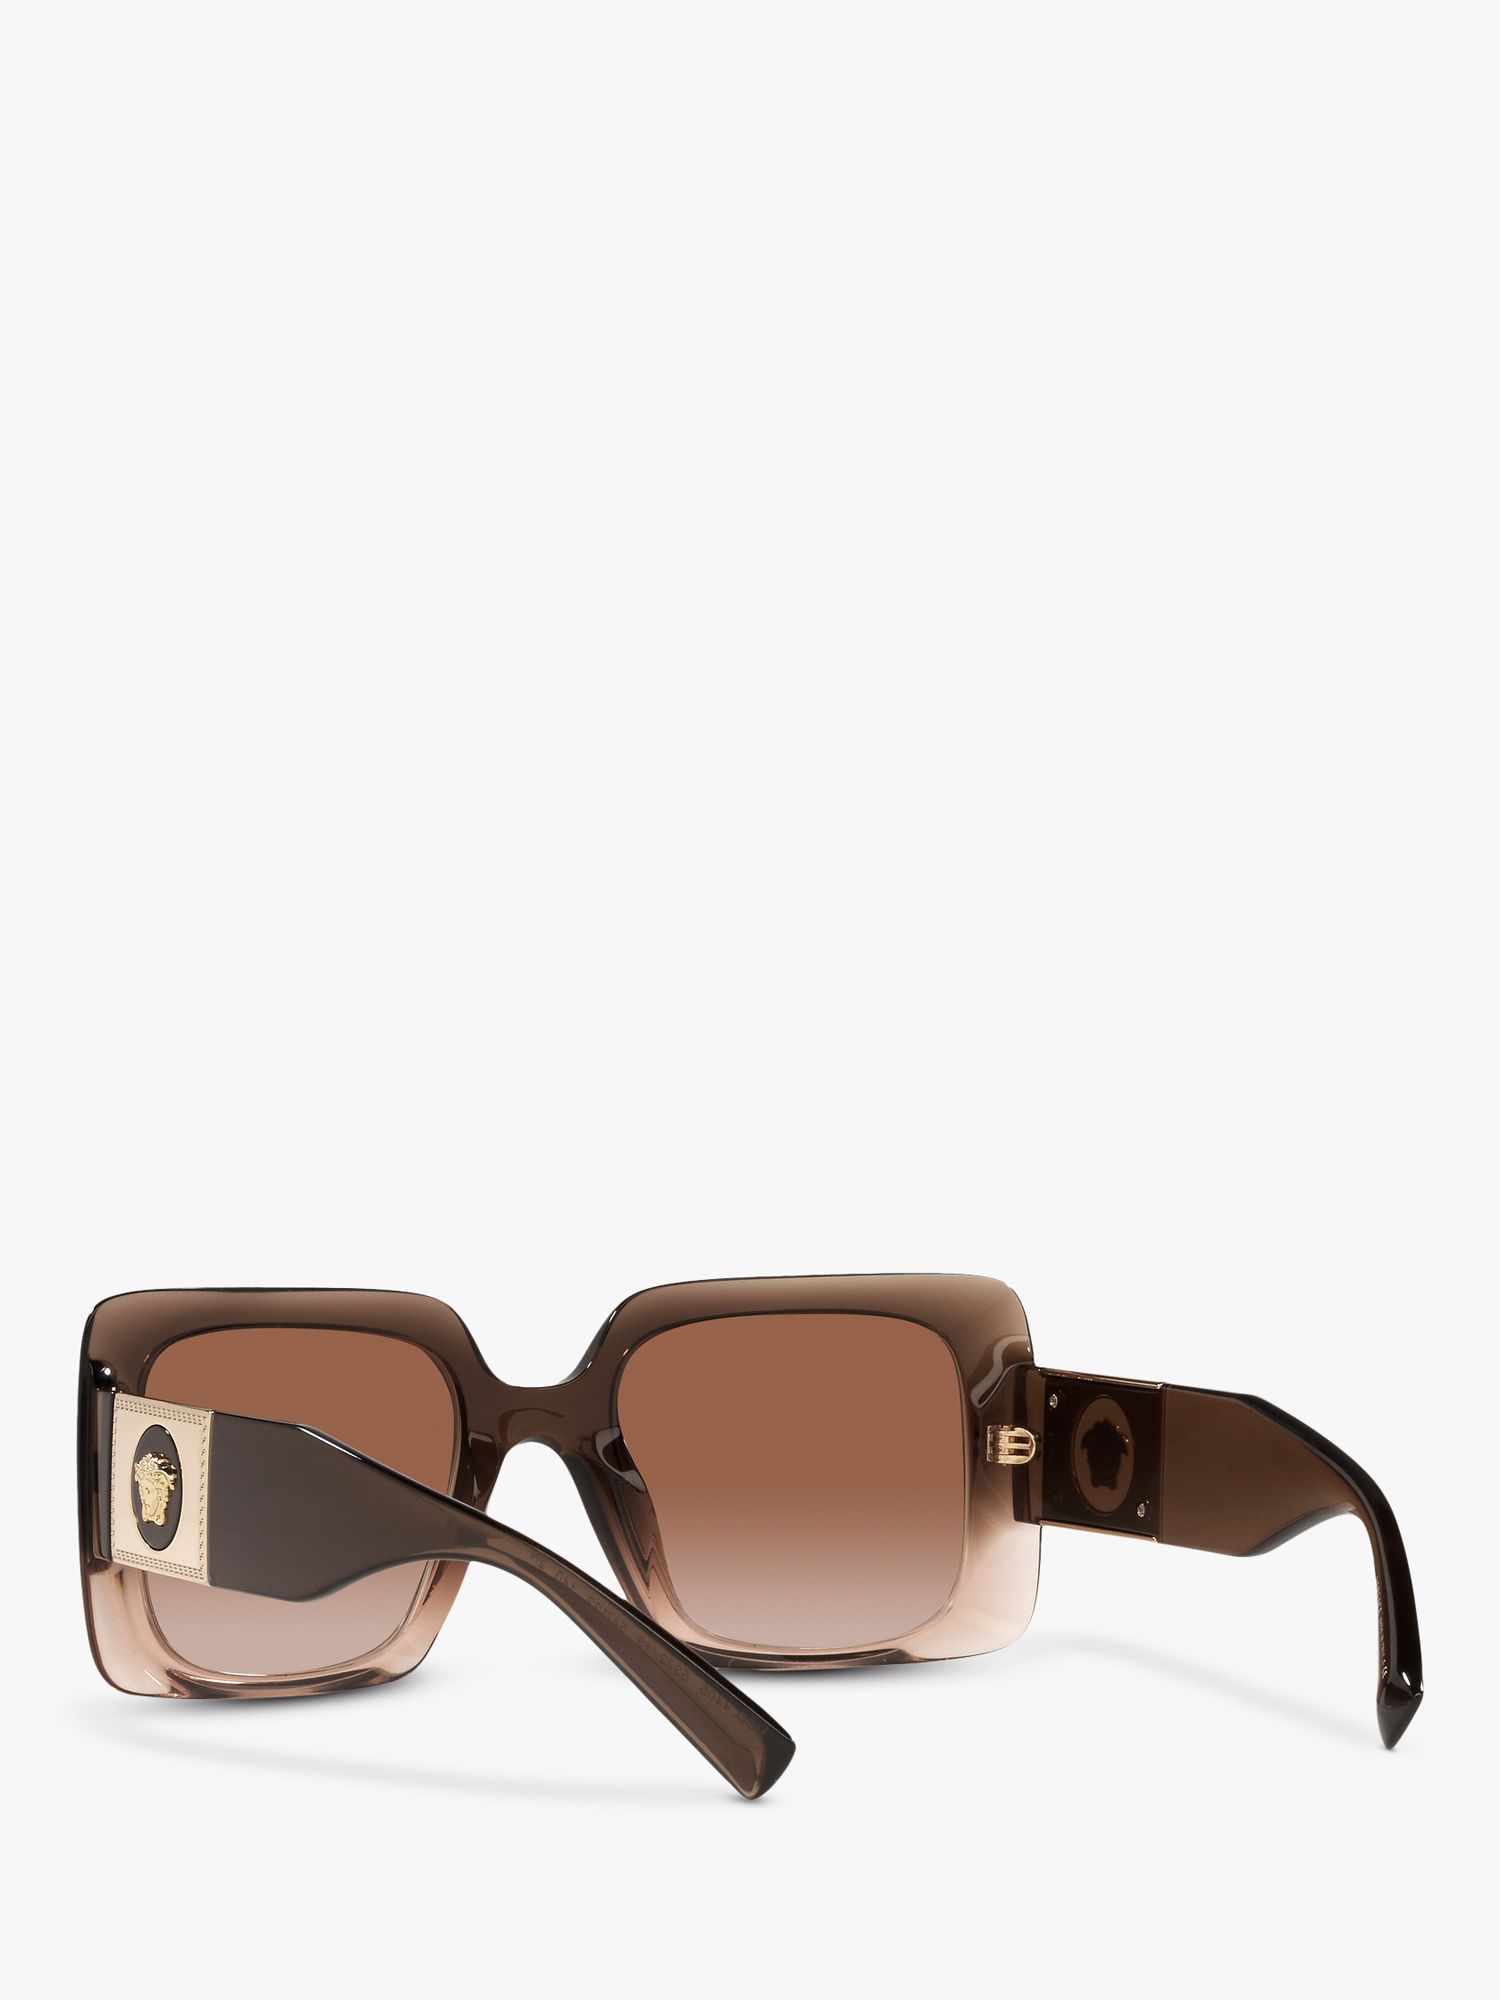 Versace VE4405 Women's Chunky Rectangular Sunglasses, Transparenet Brown/Brown Gradient